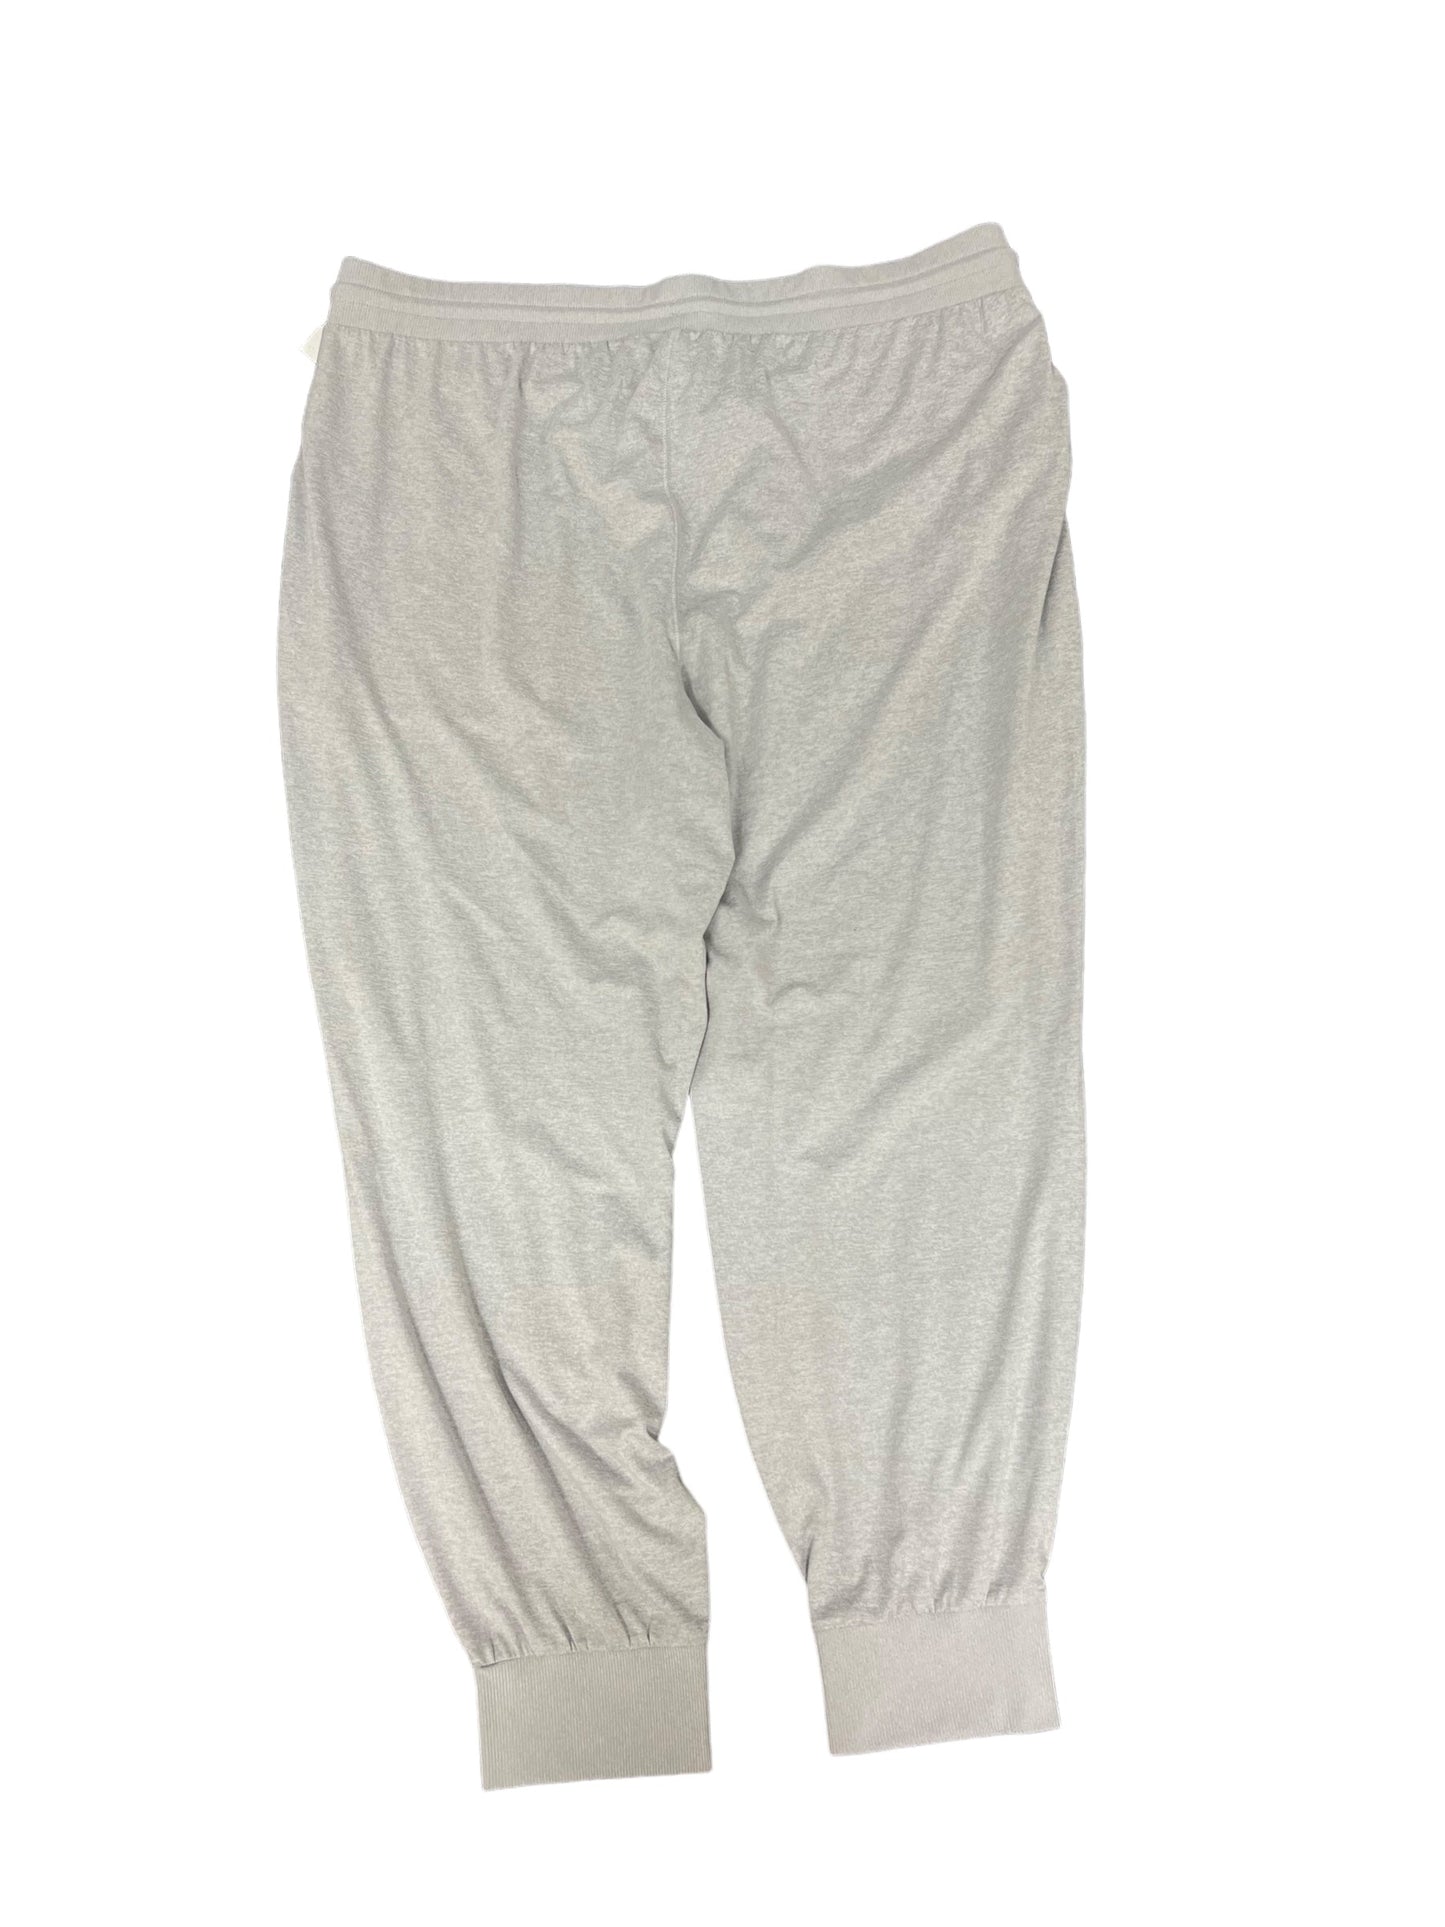 Grey Athletic Pants Athleta, Size 2x